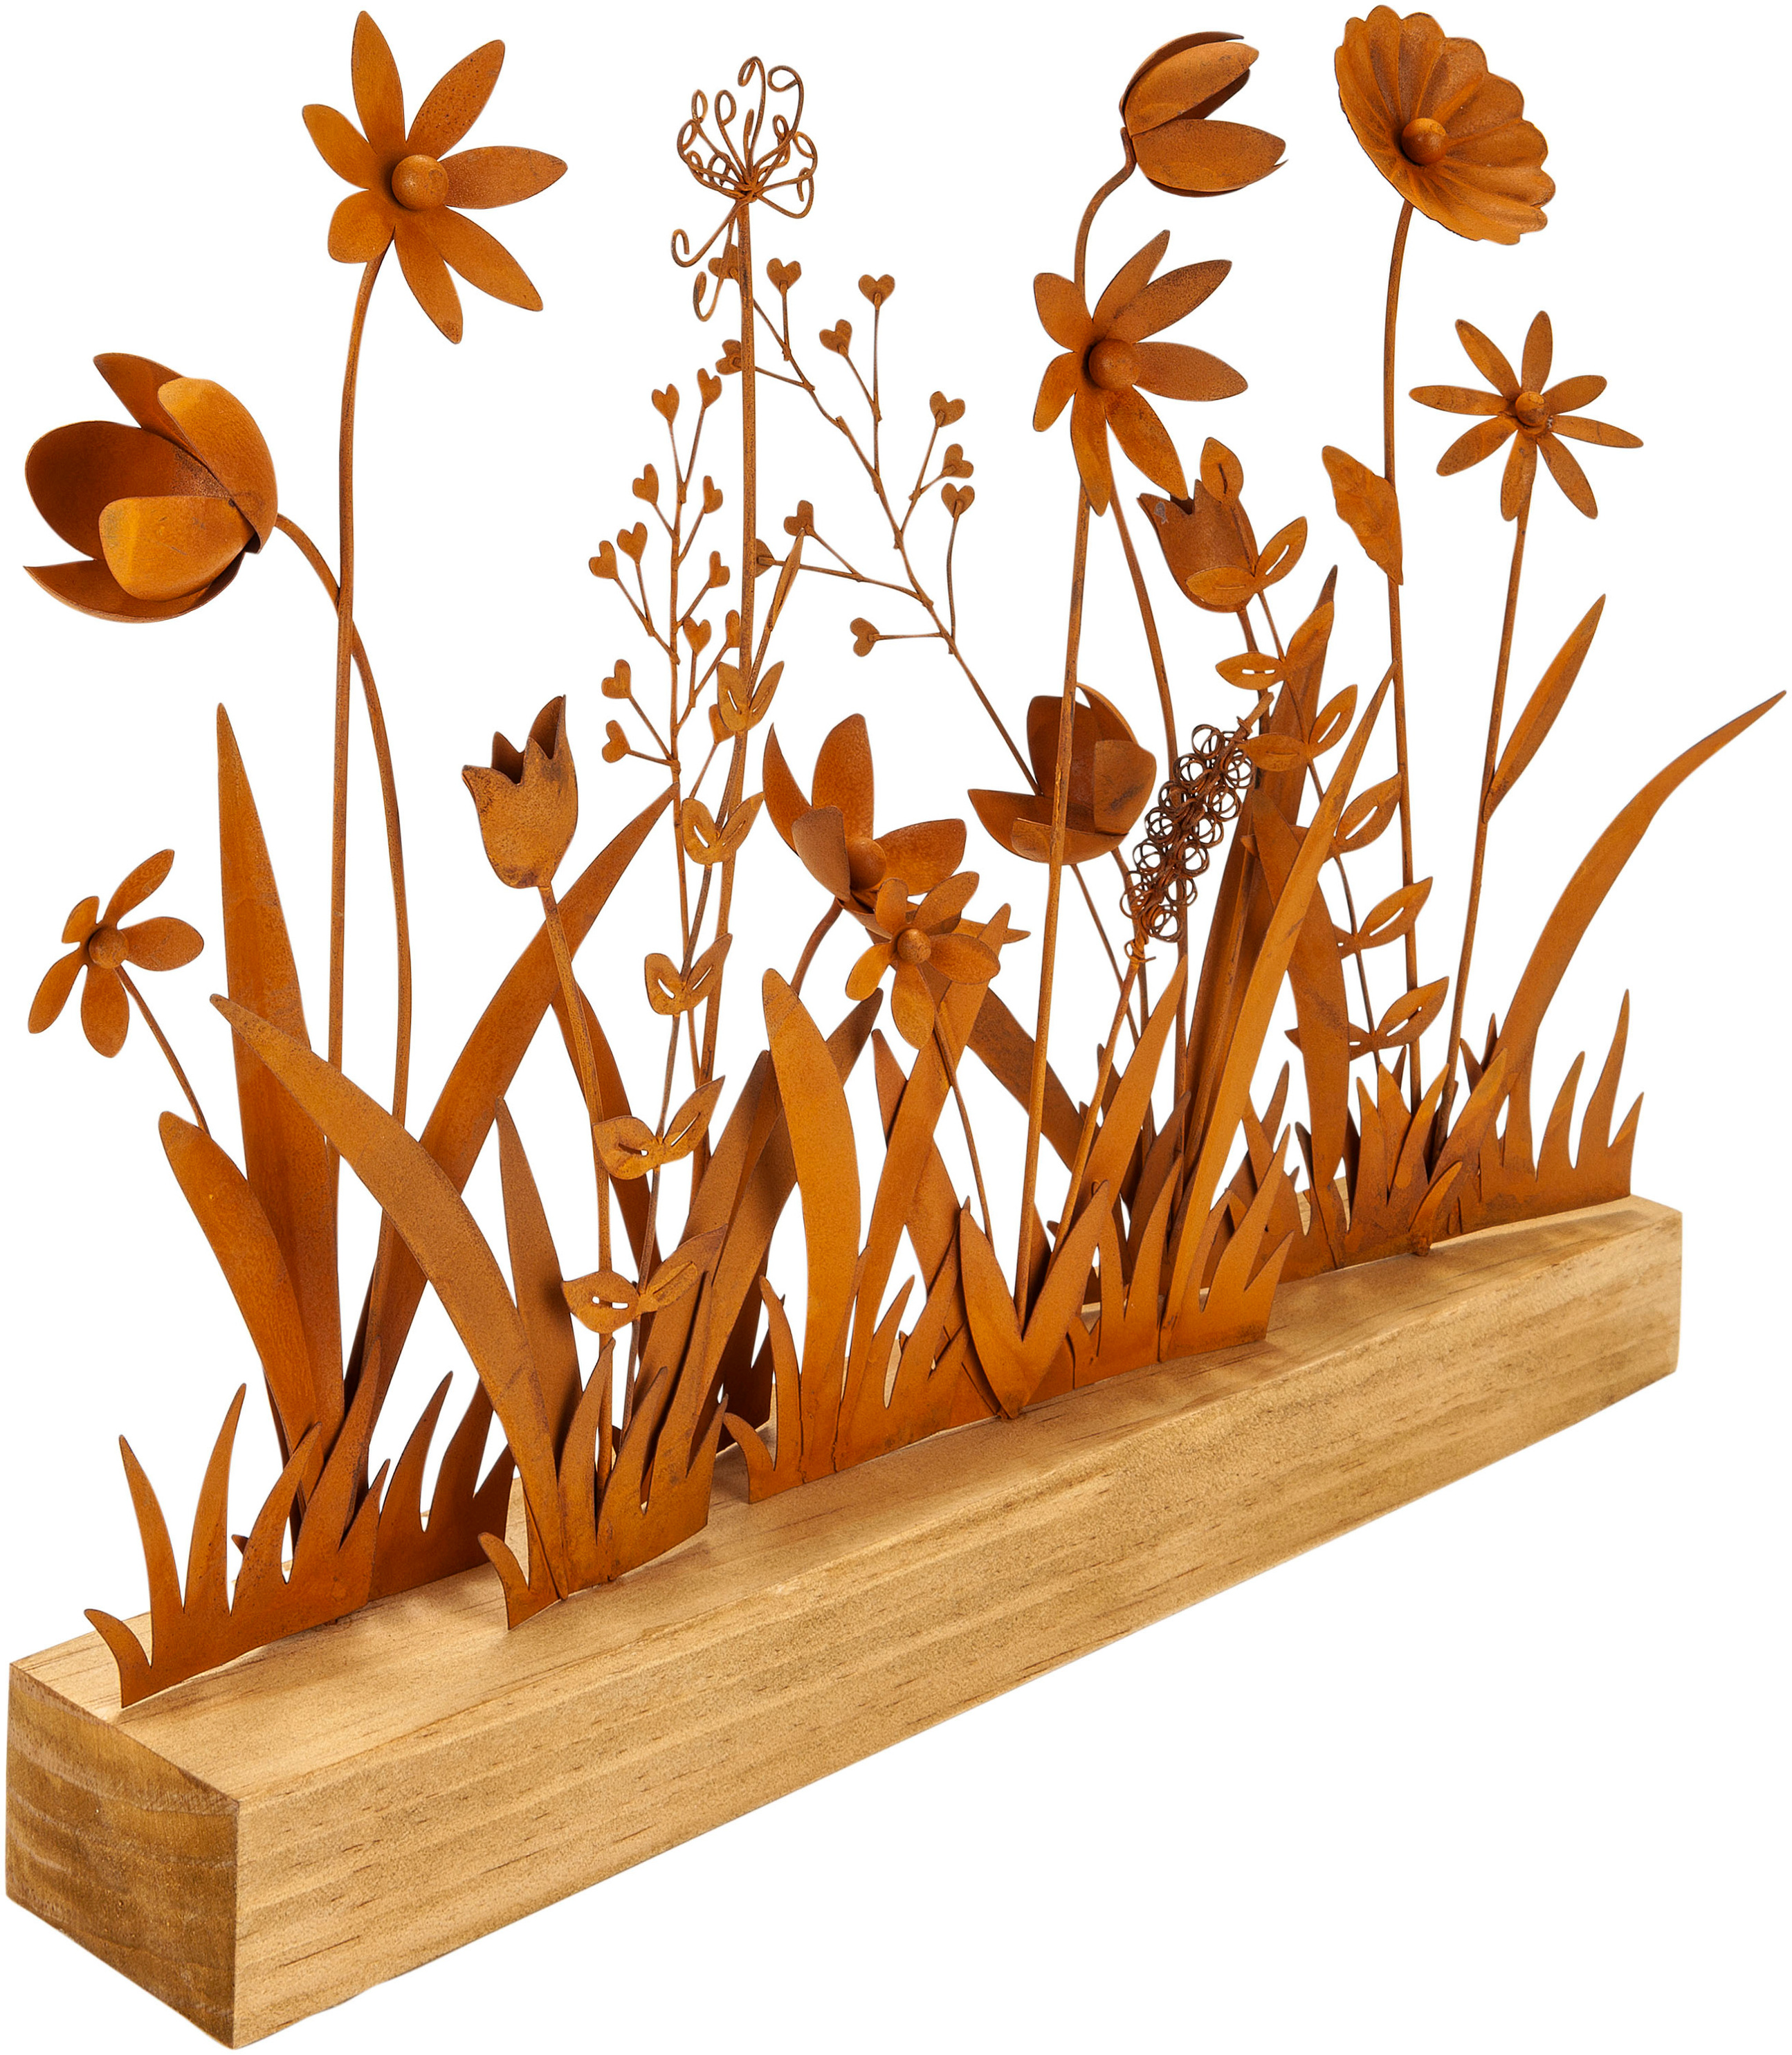 Deko-Blumen Rusty auf Holzsockel jetzt bei Weltbild.de bestellen